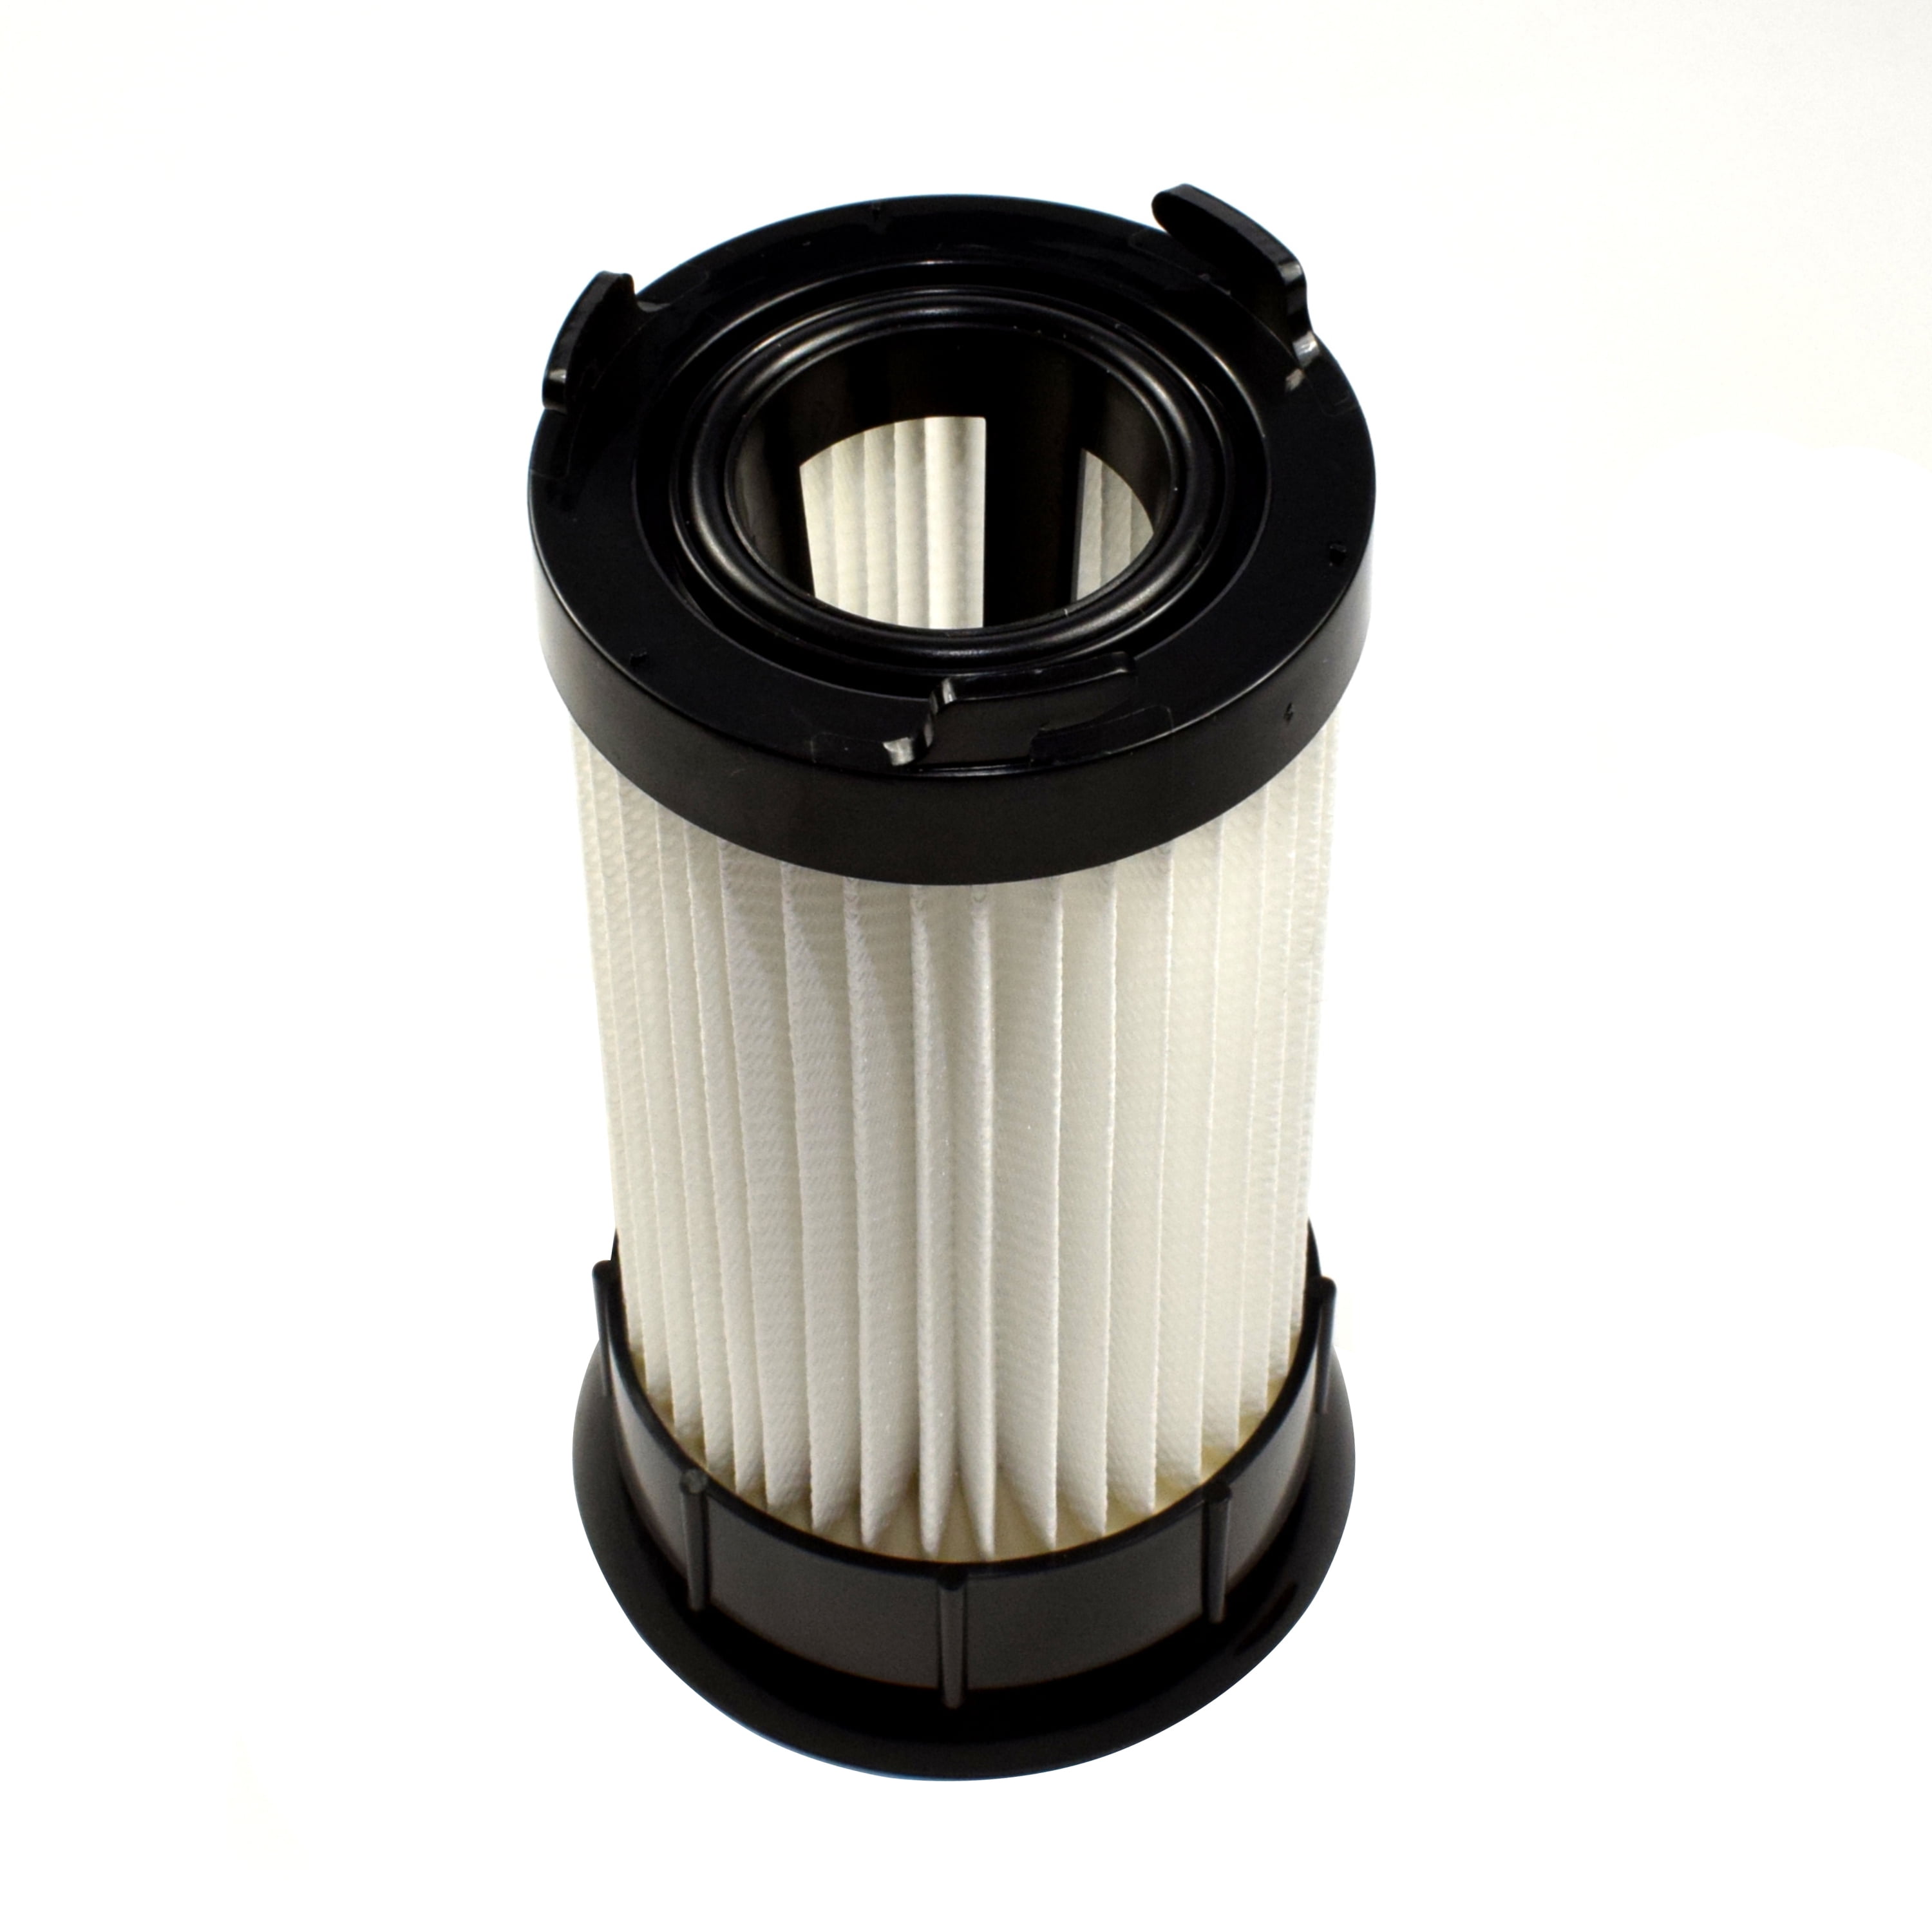 HQRP Washable & Reusable Filter for Eureka Power Plus 4703D Vacuums 